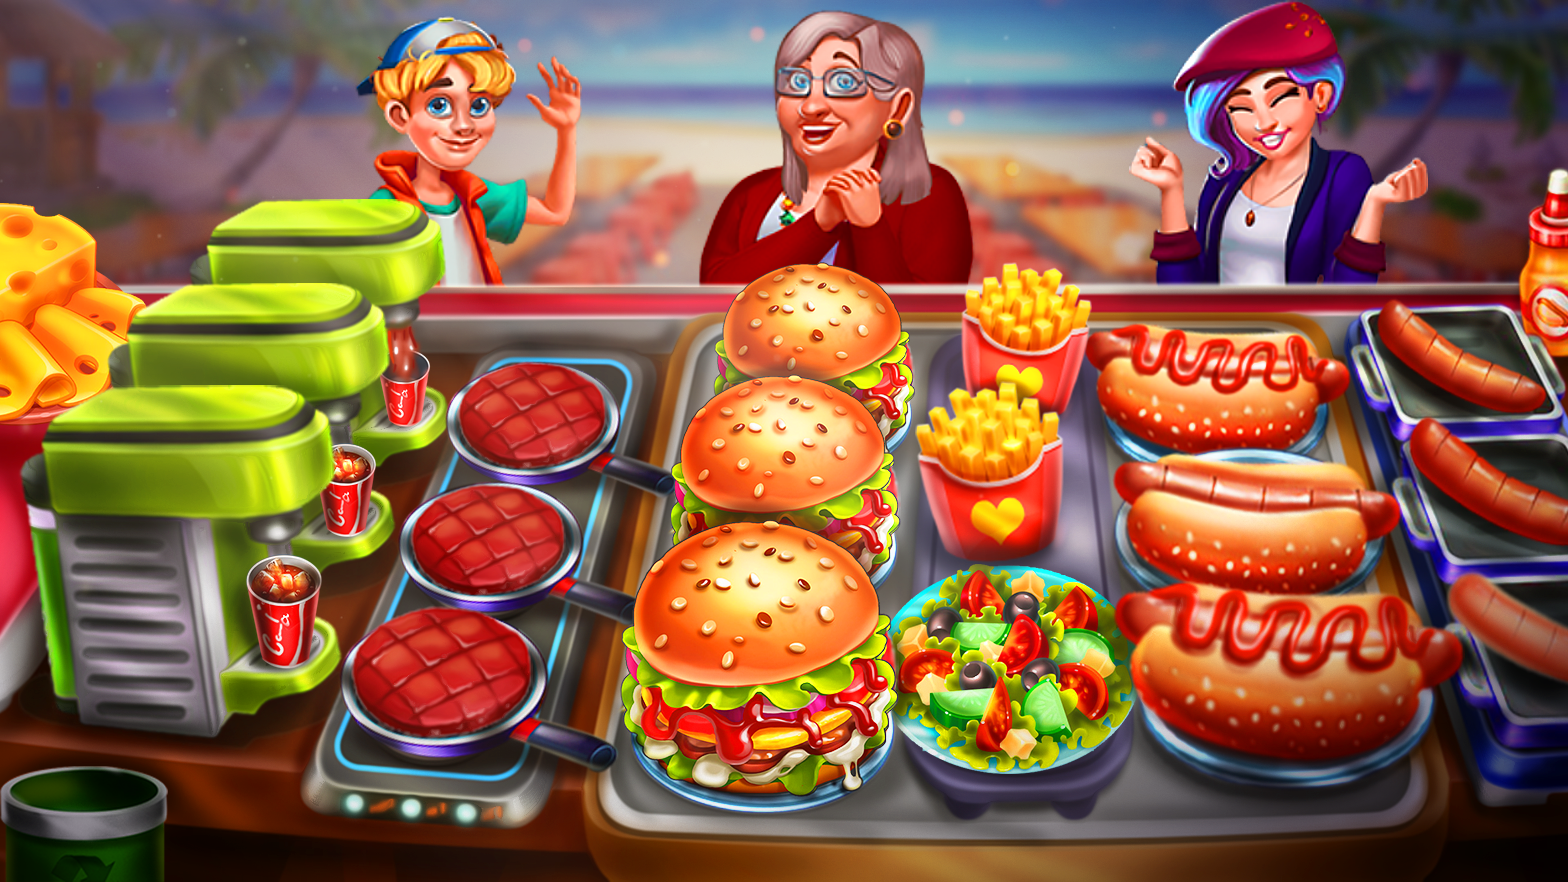 Screenshot 1 of Cucina gustosa Restaurant Game 2.6